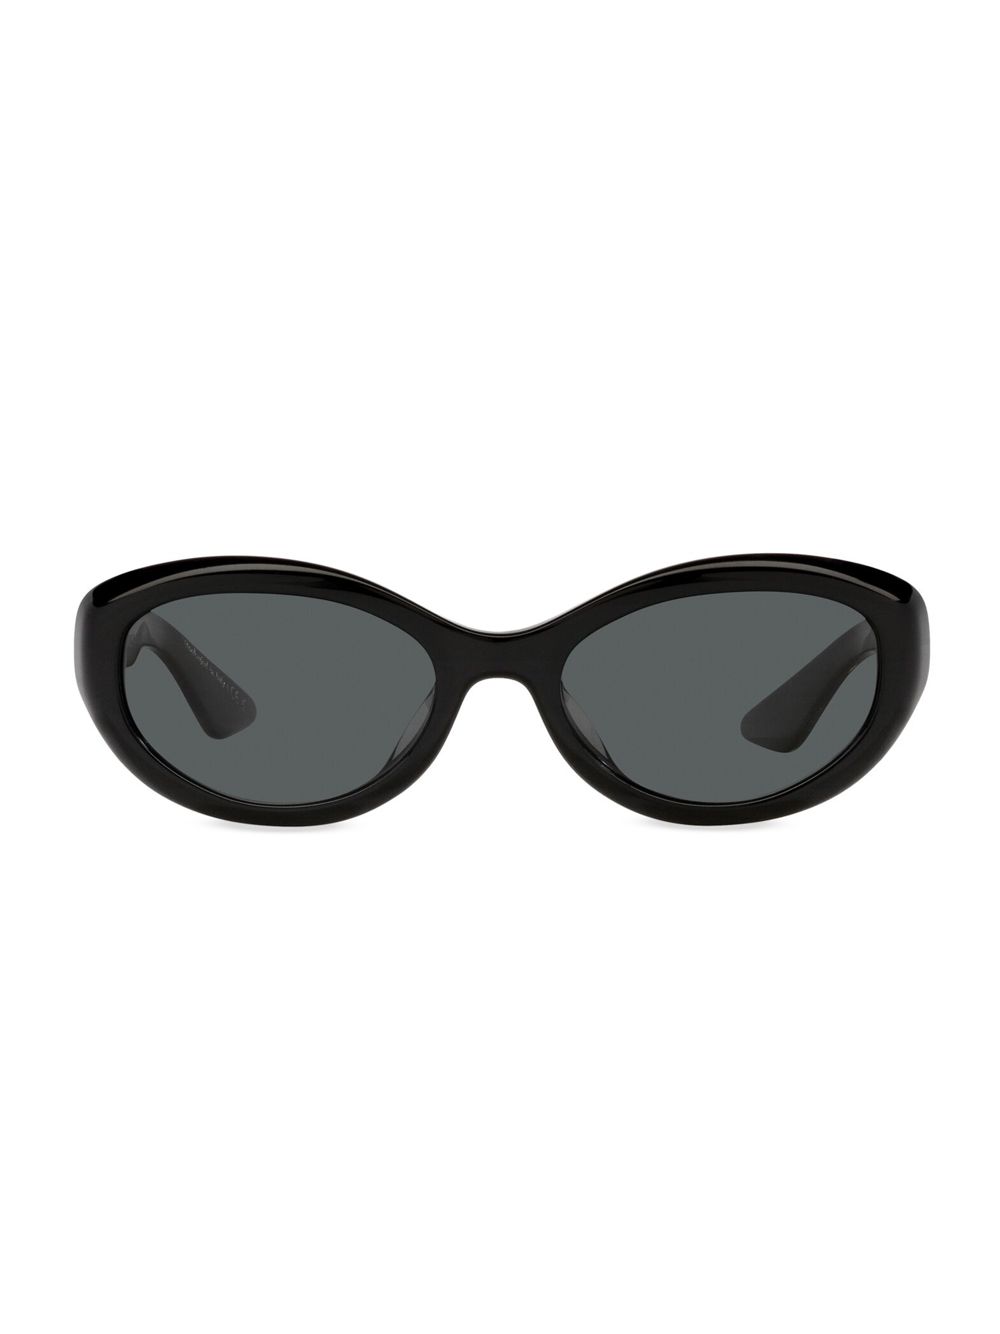 Овальные солнцезащитные очки Oliver Peoples 53MM KHAITE x Oliver Peoples, черный солнцезащитные очки кошачий глаз x oliver peoples 1998c khaite зеленый